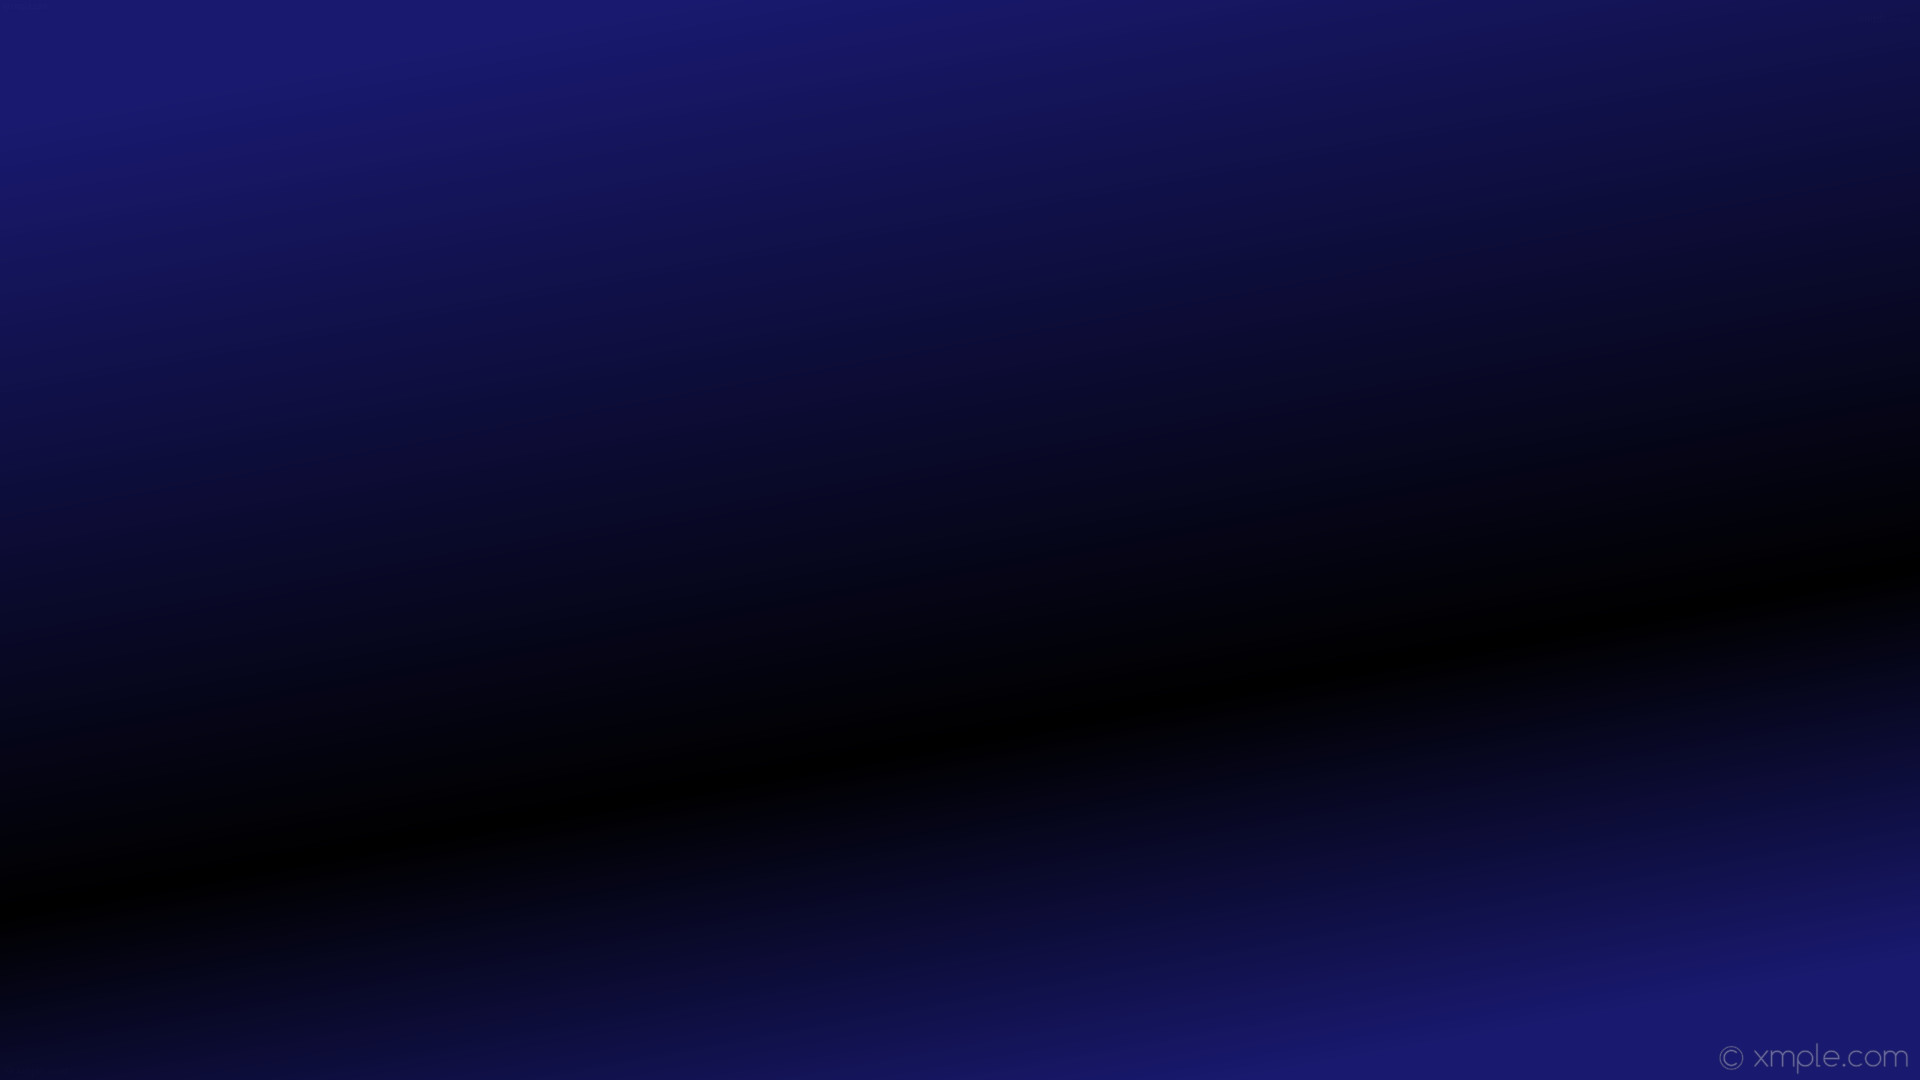 1920x1080 wallpaper highlight blue black linear gradient midnight blue #191970  #000000 300Â° 33%